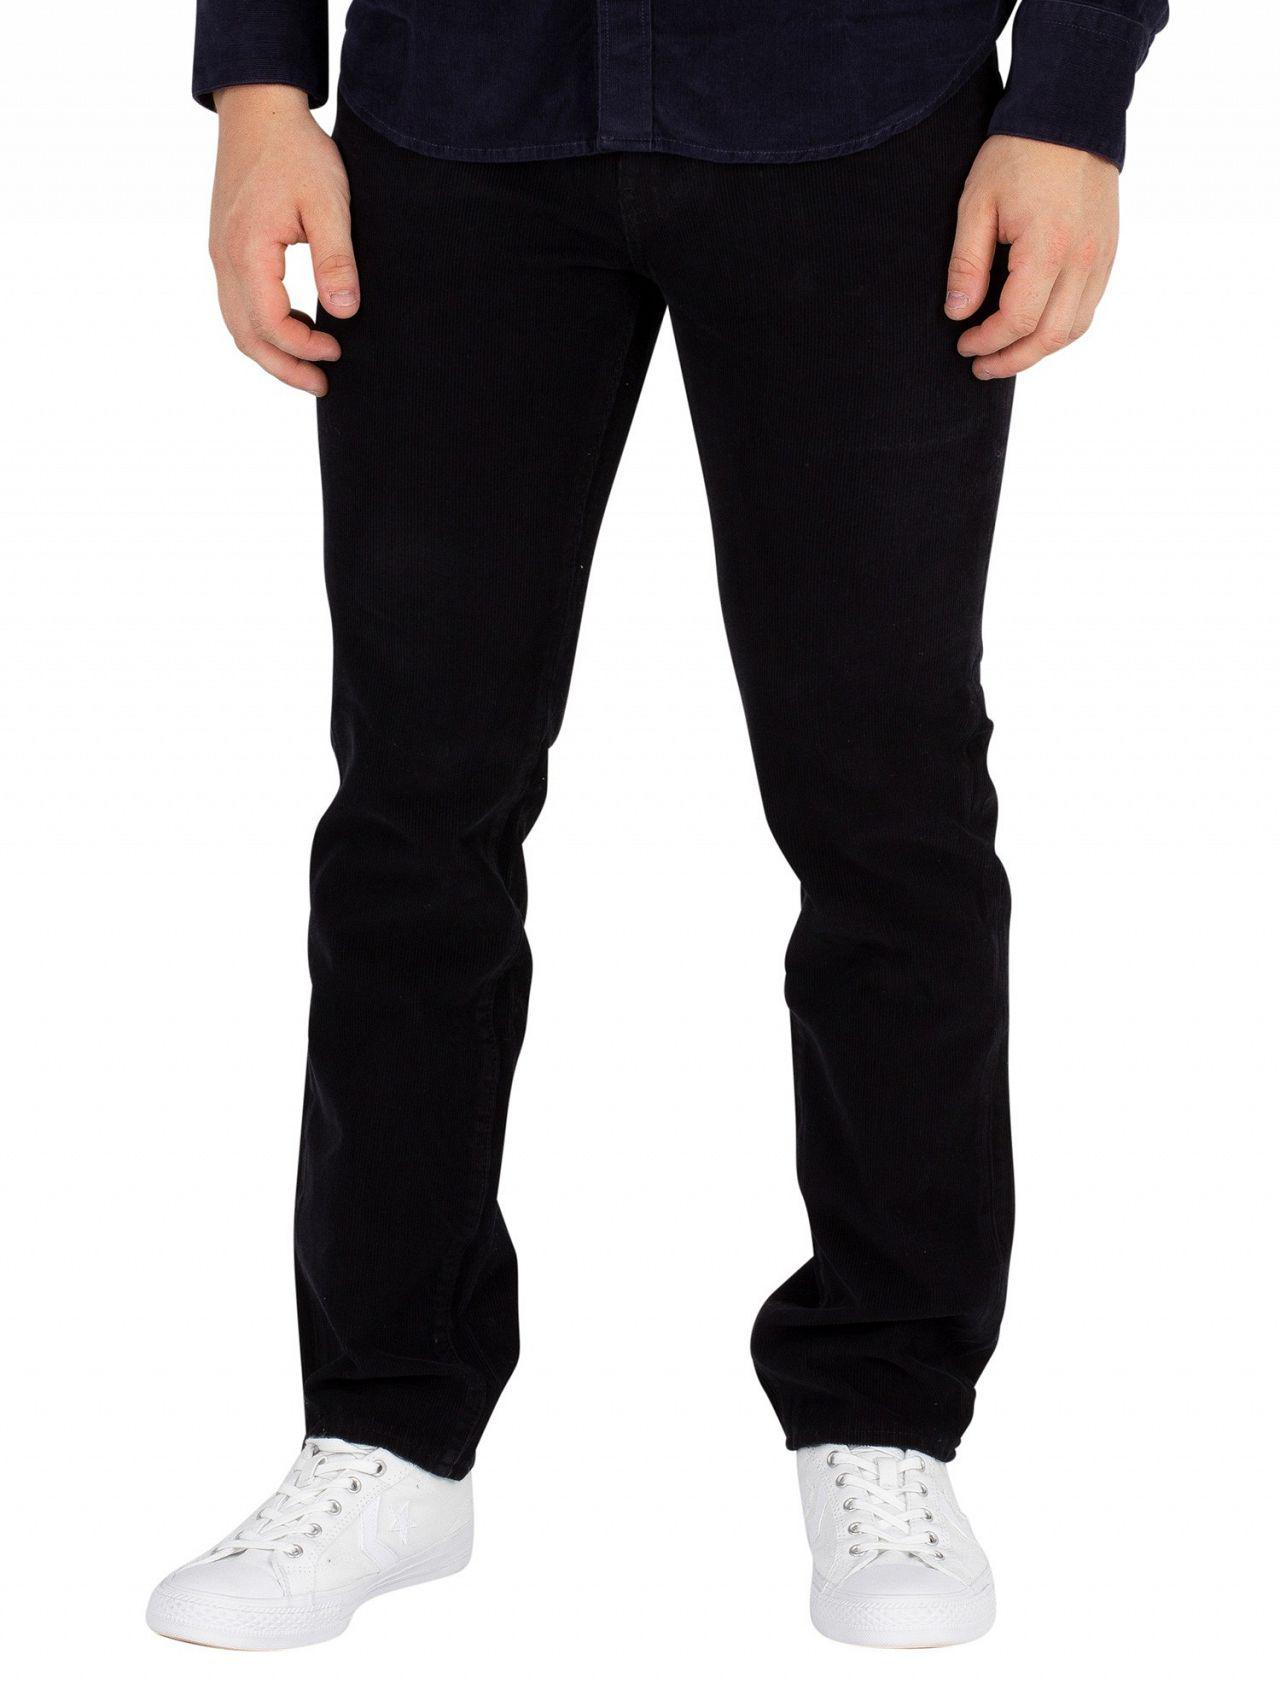 511™ Slim Jeans - Black